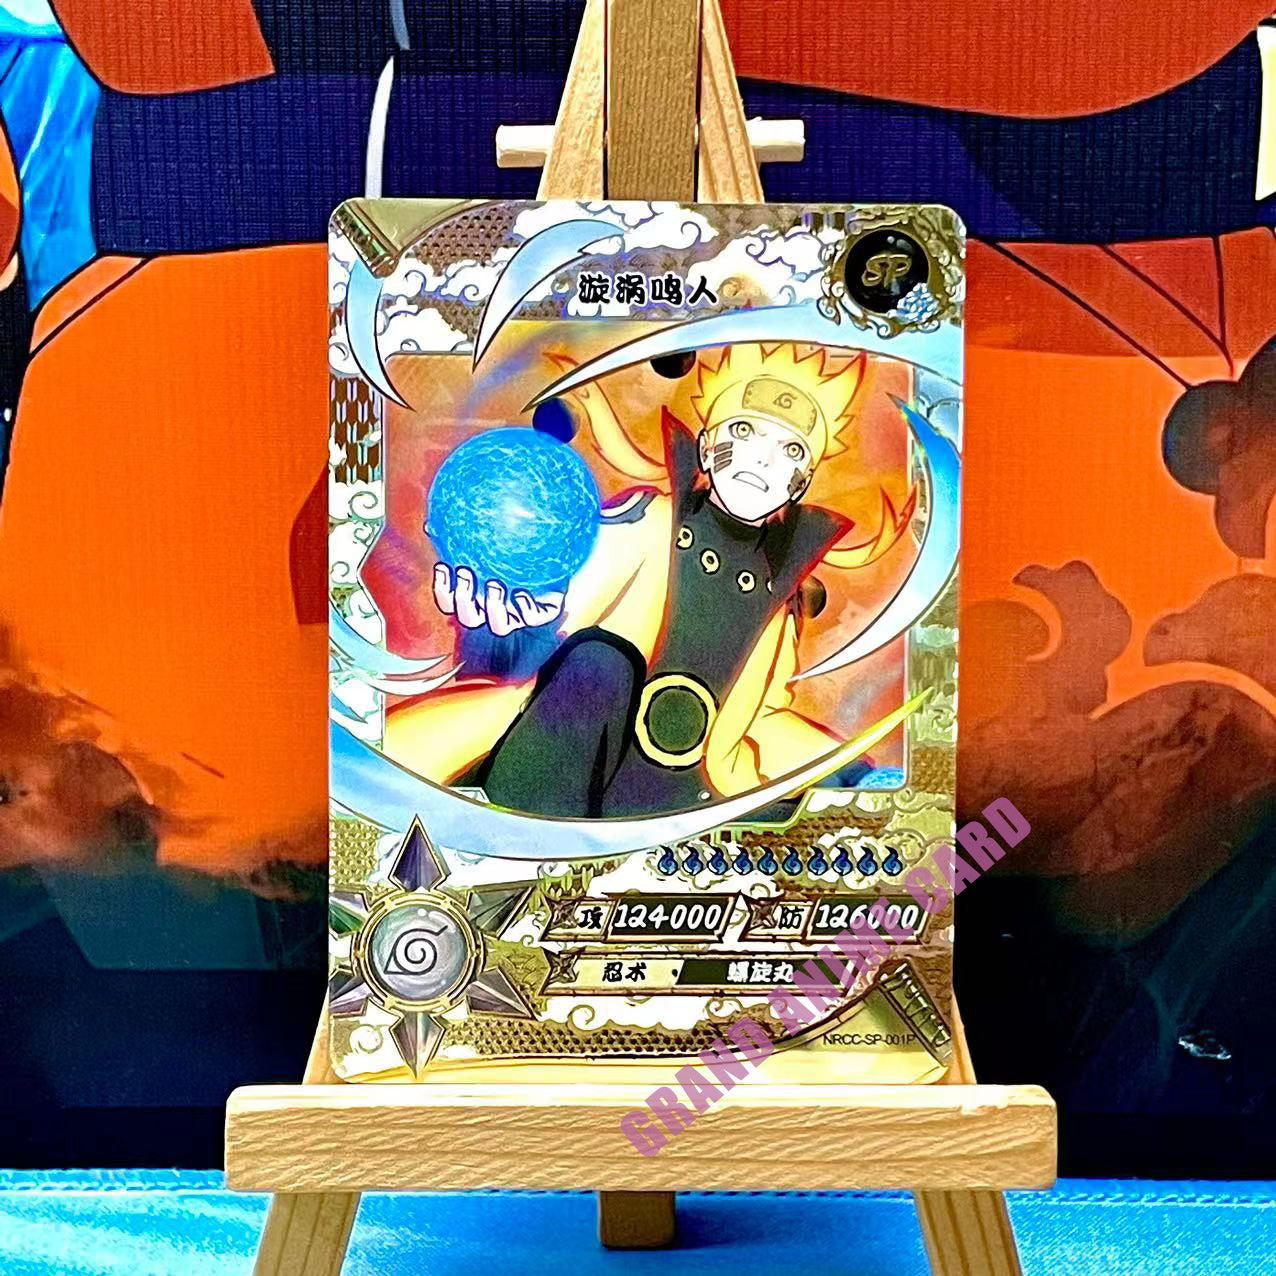 NRCC SP-Kayou Naruto Card Non Grade NRCC SP Series SP001-006 Ninja Age